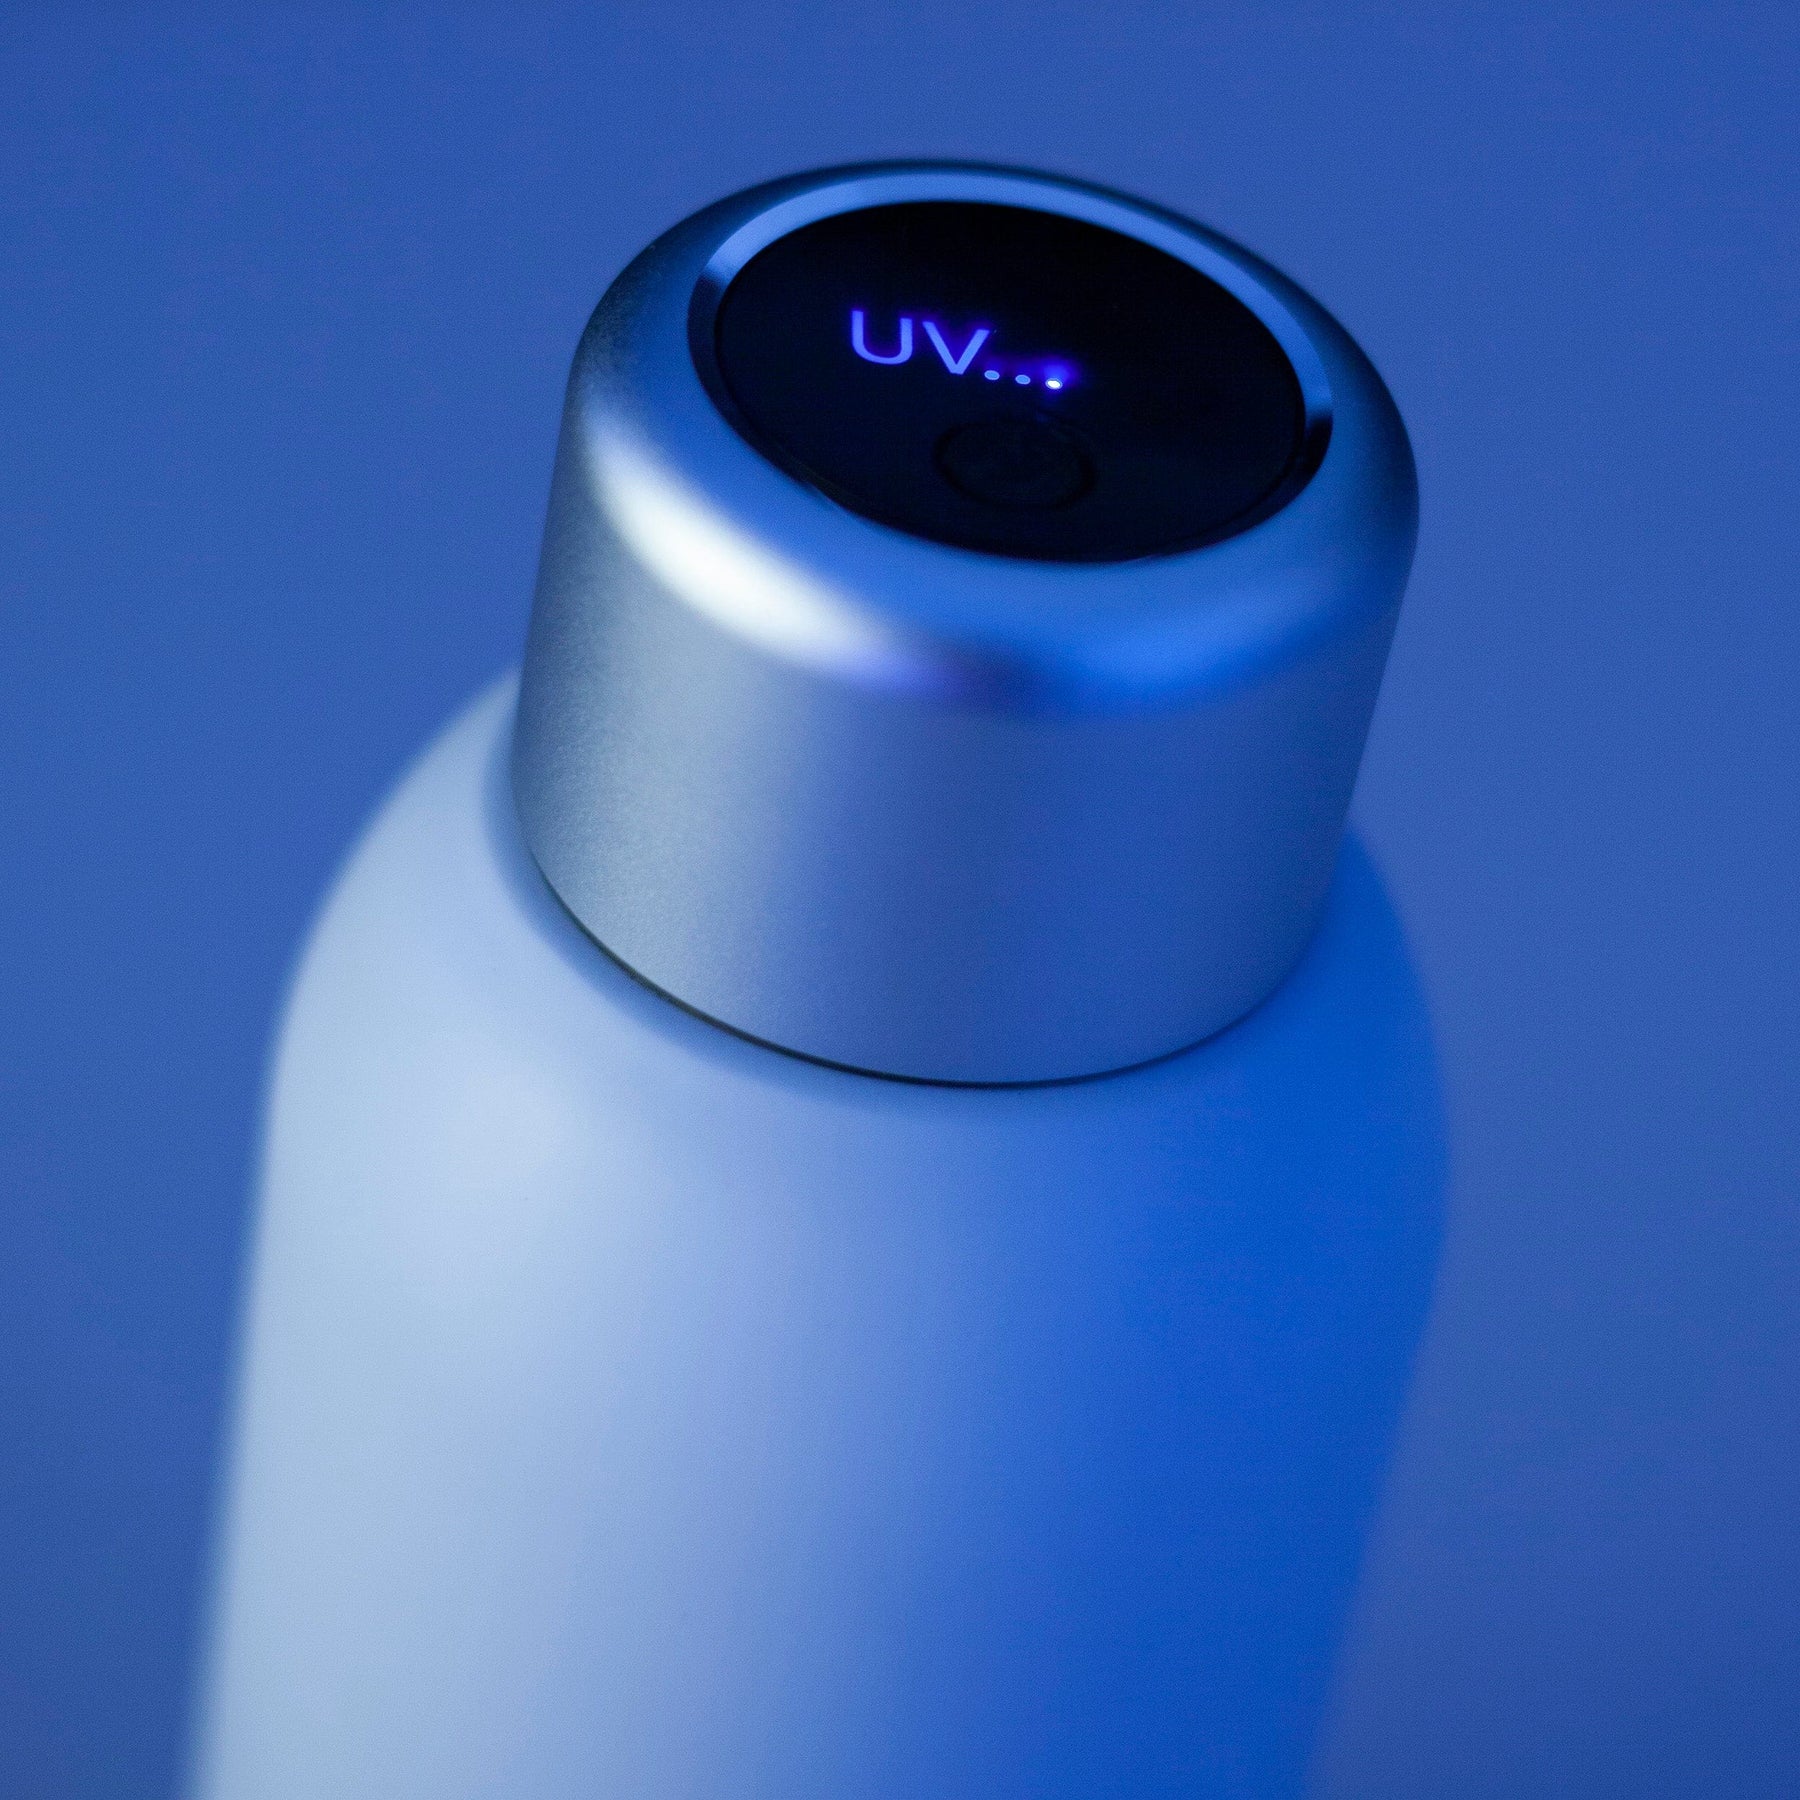 Botella de Agua Purificante: Anti Gérmenes y Malos Olores con luz UV